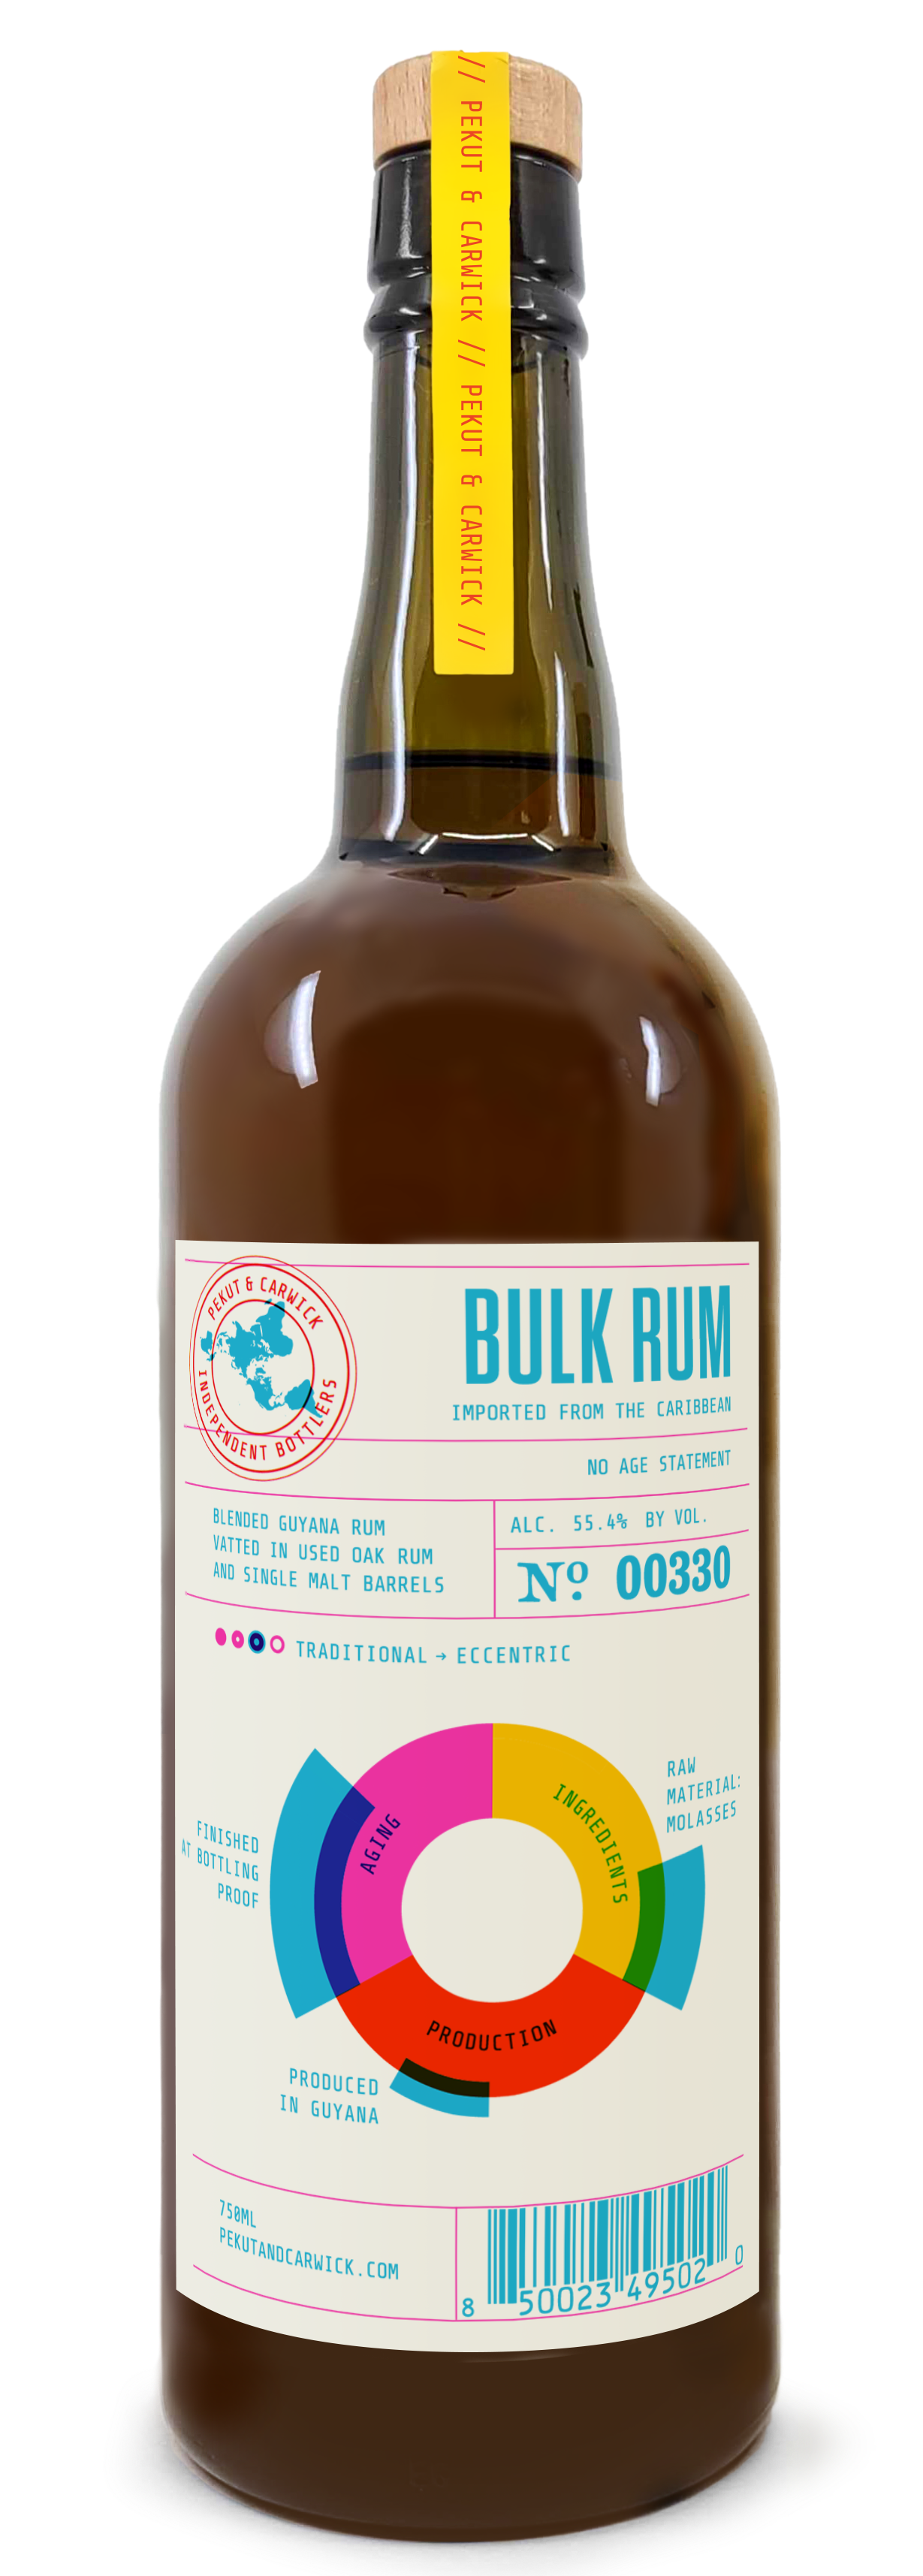 A bottle of Pekut and Carwick Bulk Rum from Guyana